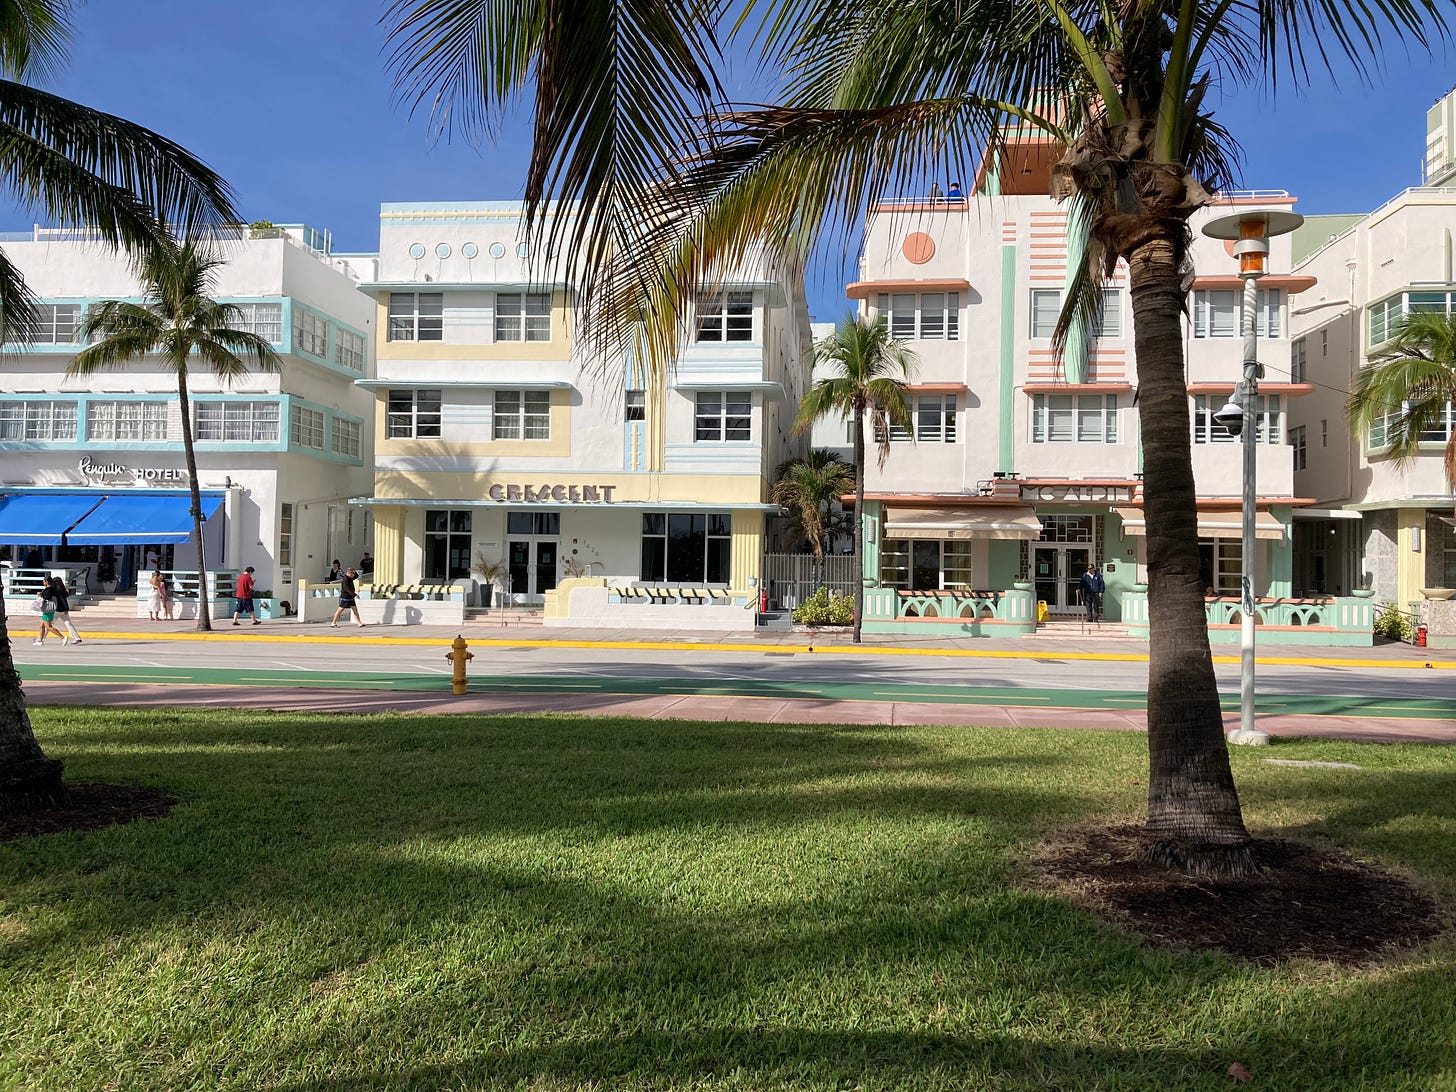 Art deco hotels in Miami Beach